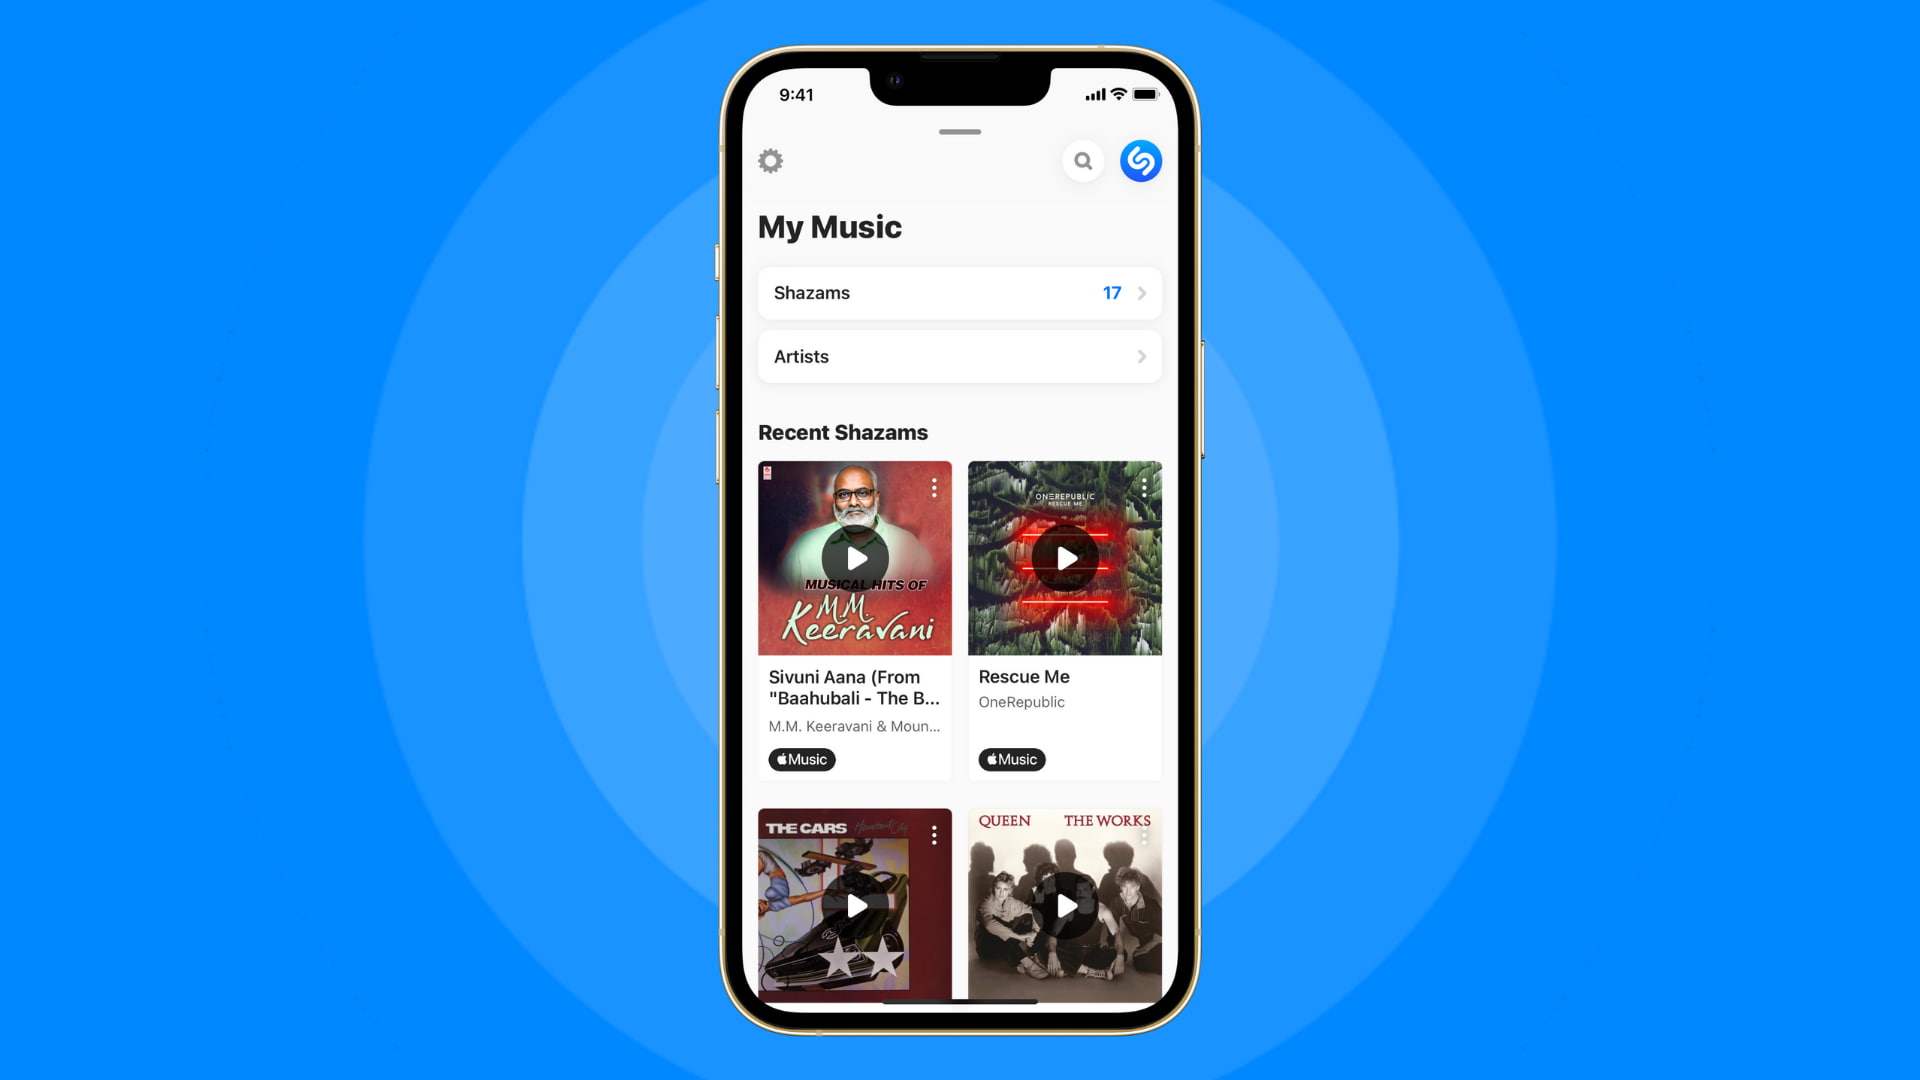 Featured image showing Shazam song history on iPhone, set against blue background